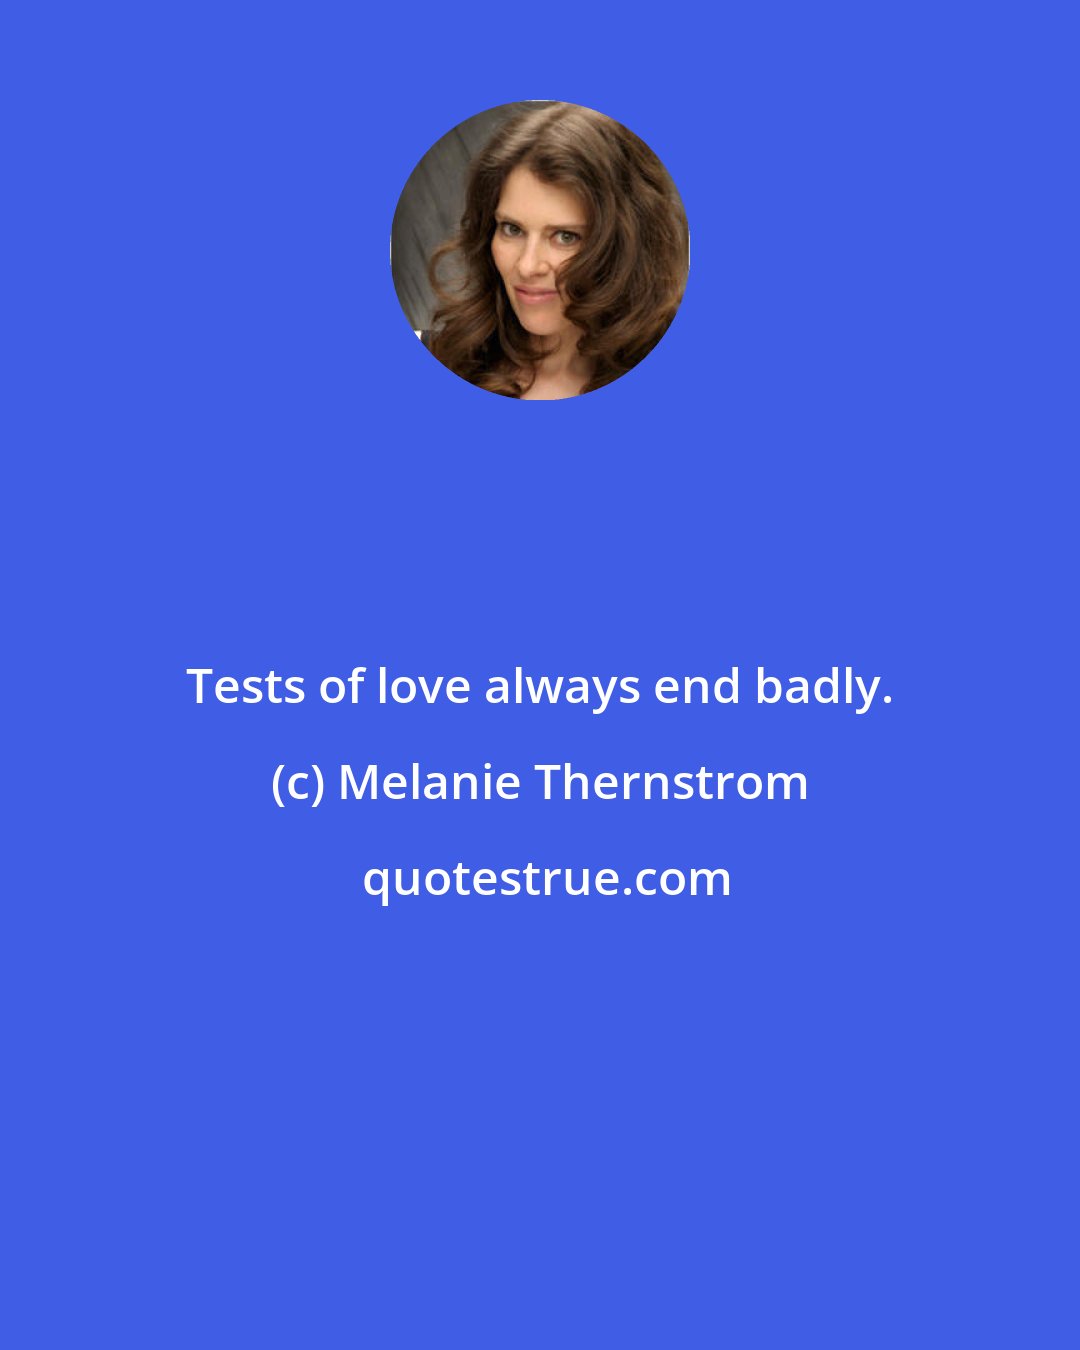 Melanie Thernstrom: Tests of love always end badly.